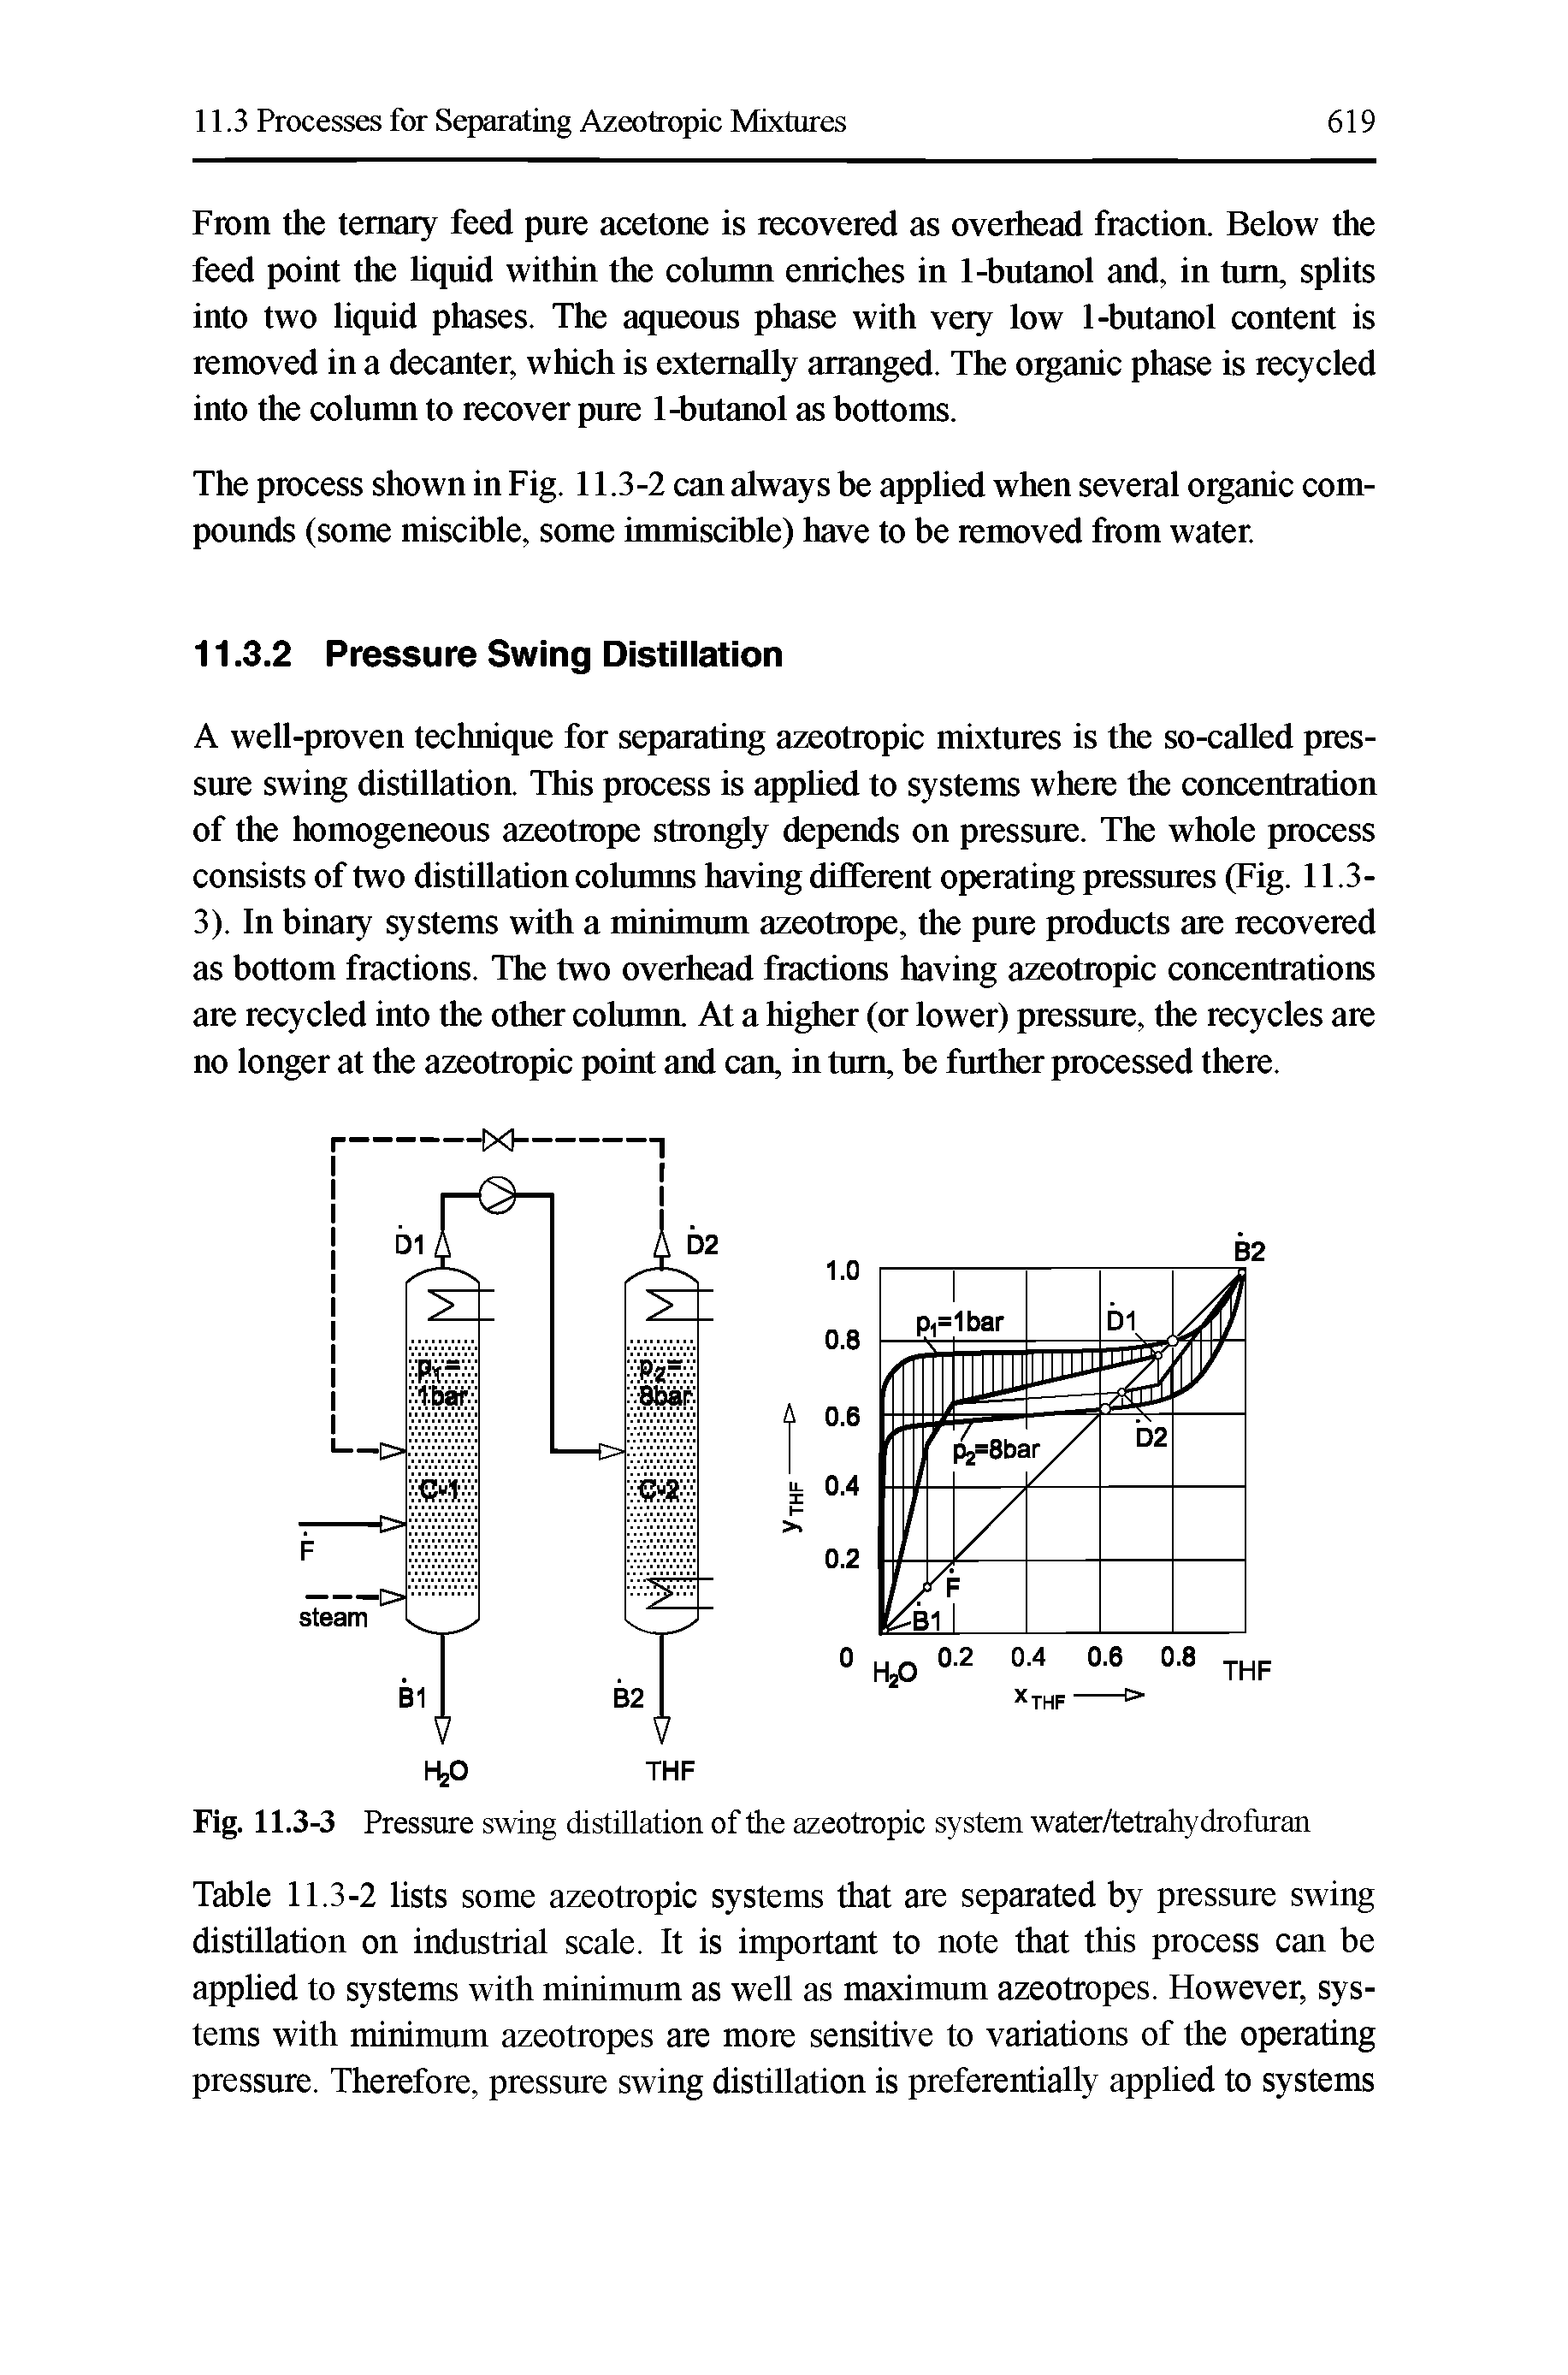 Fig. 11.3-3 Pressure swing distillation of the azeotropic system water/tetrahydrofuran...